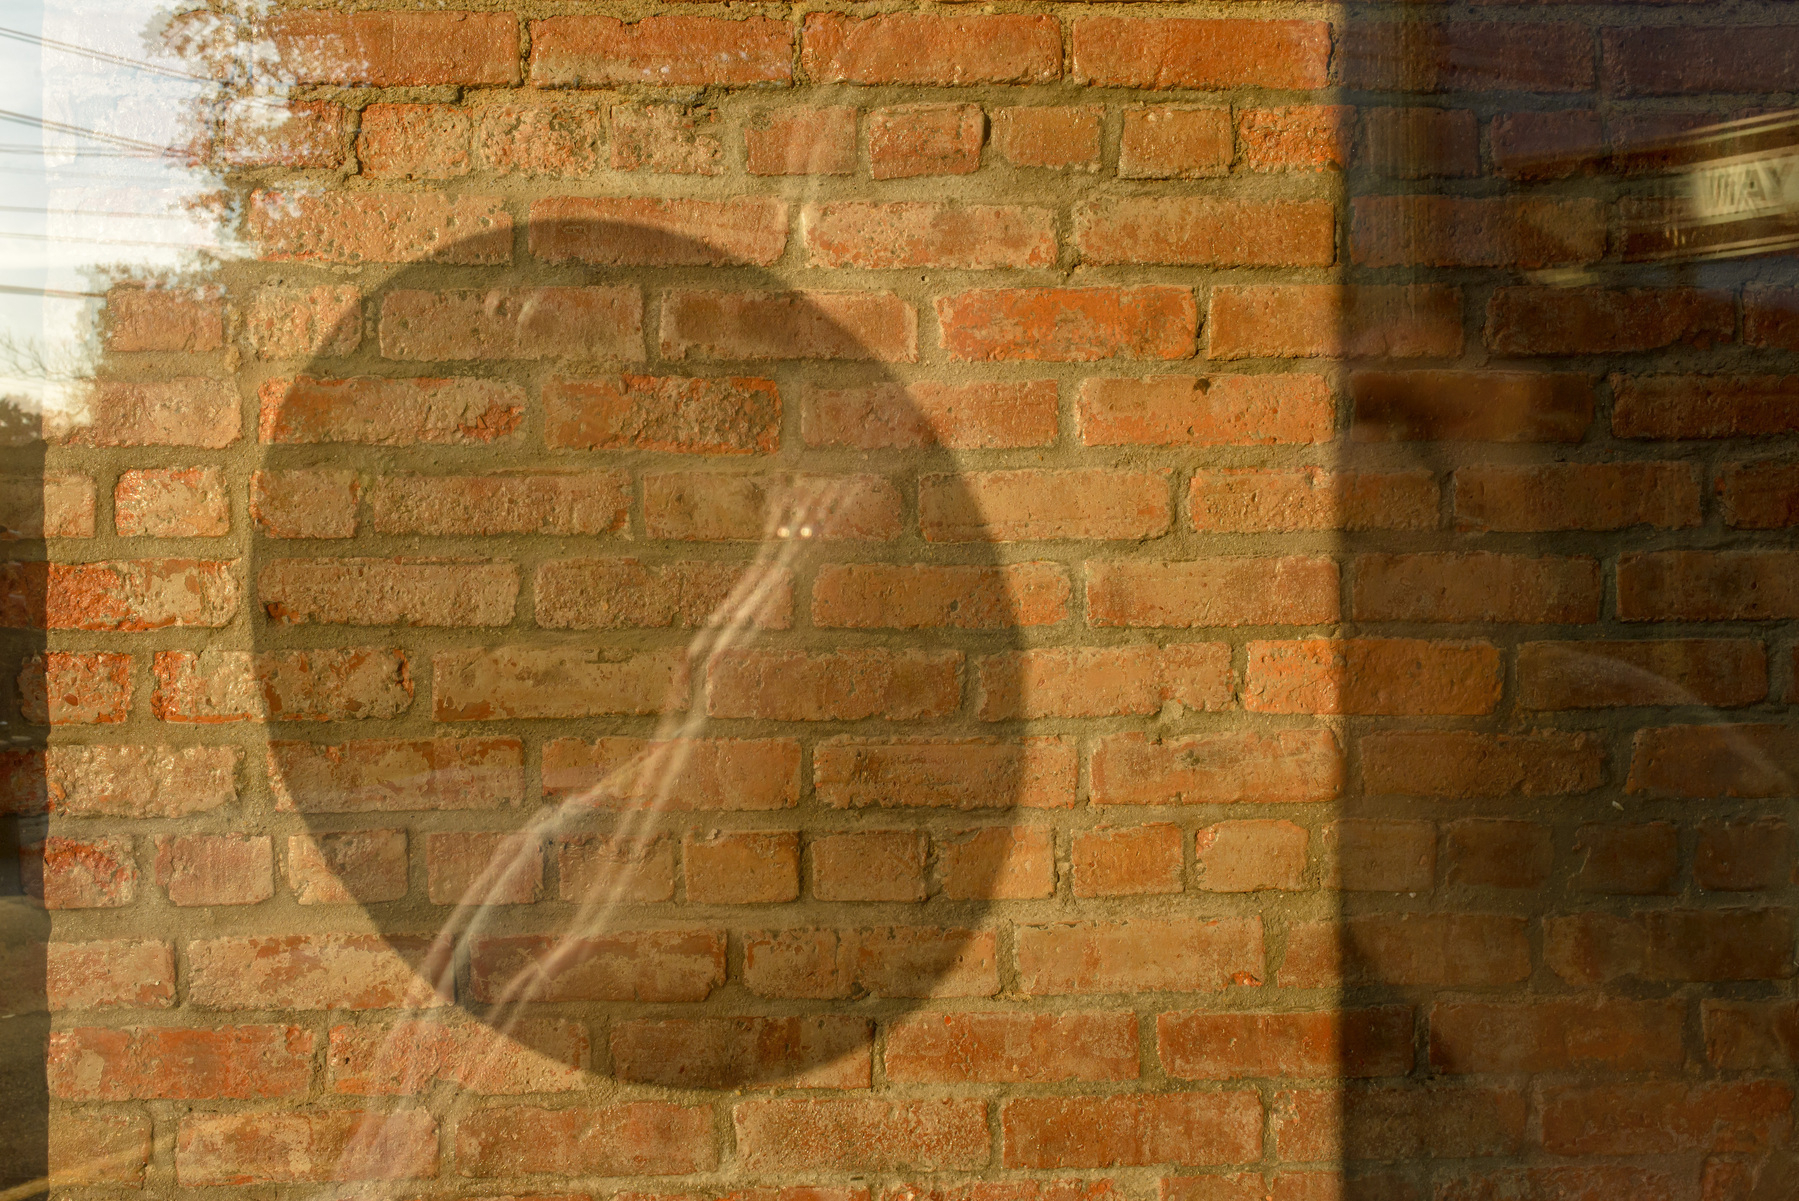 Circular shadow on brick wall in a shop.